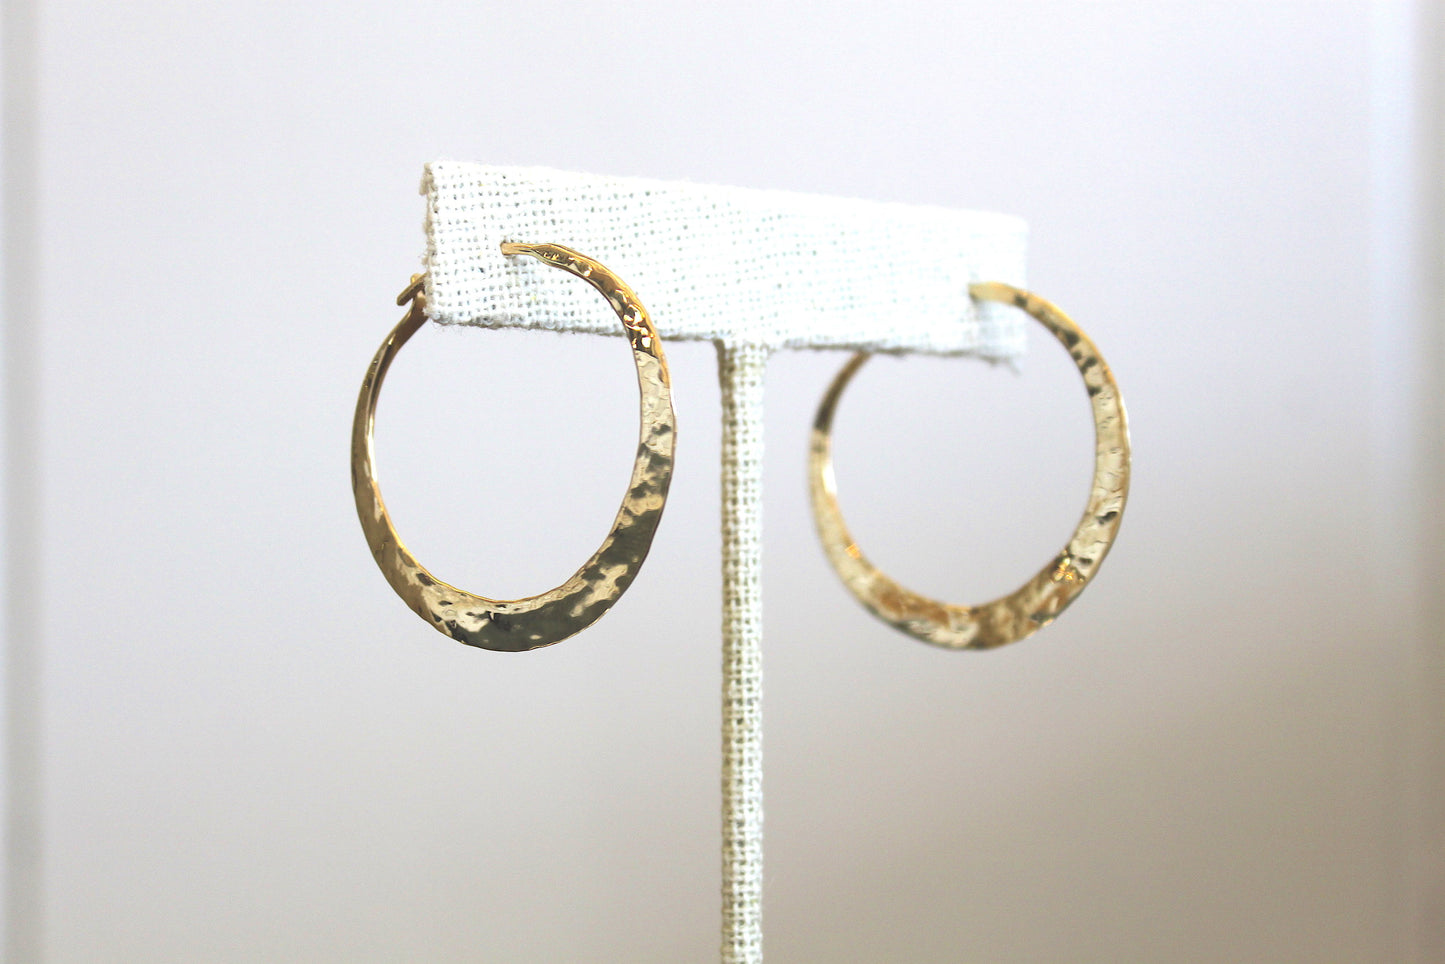 14K Yellow Gold Hammered Textured Hoop Earrings handmade by Jewel in the Sea Nantucket